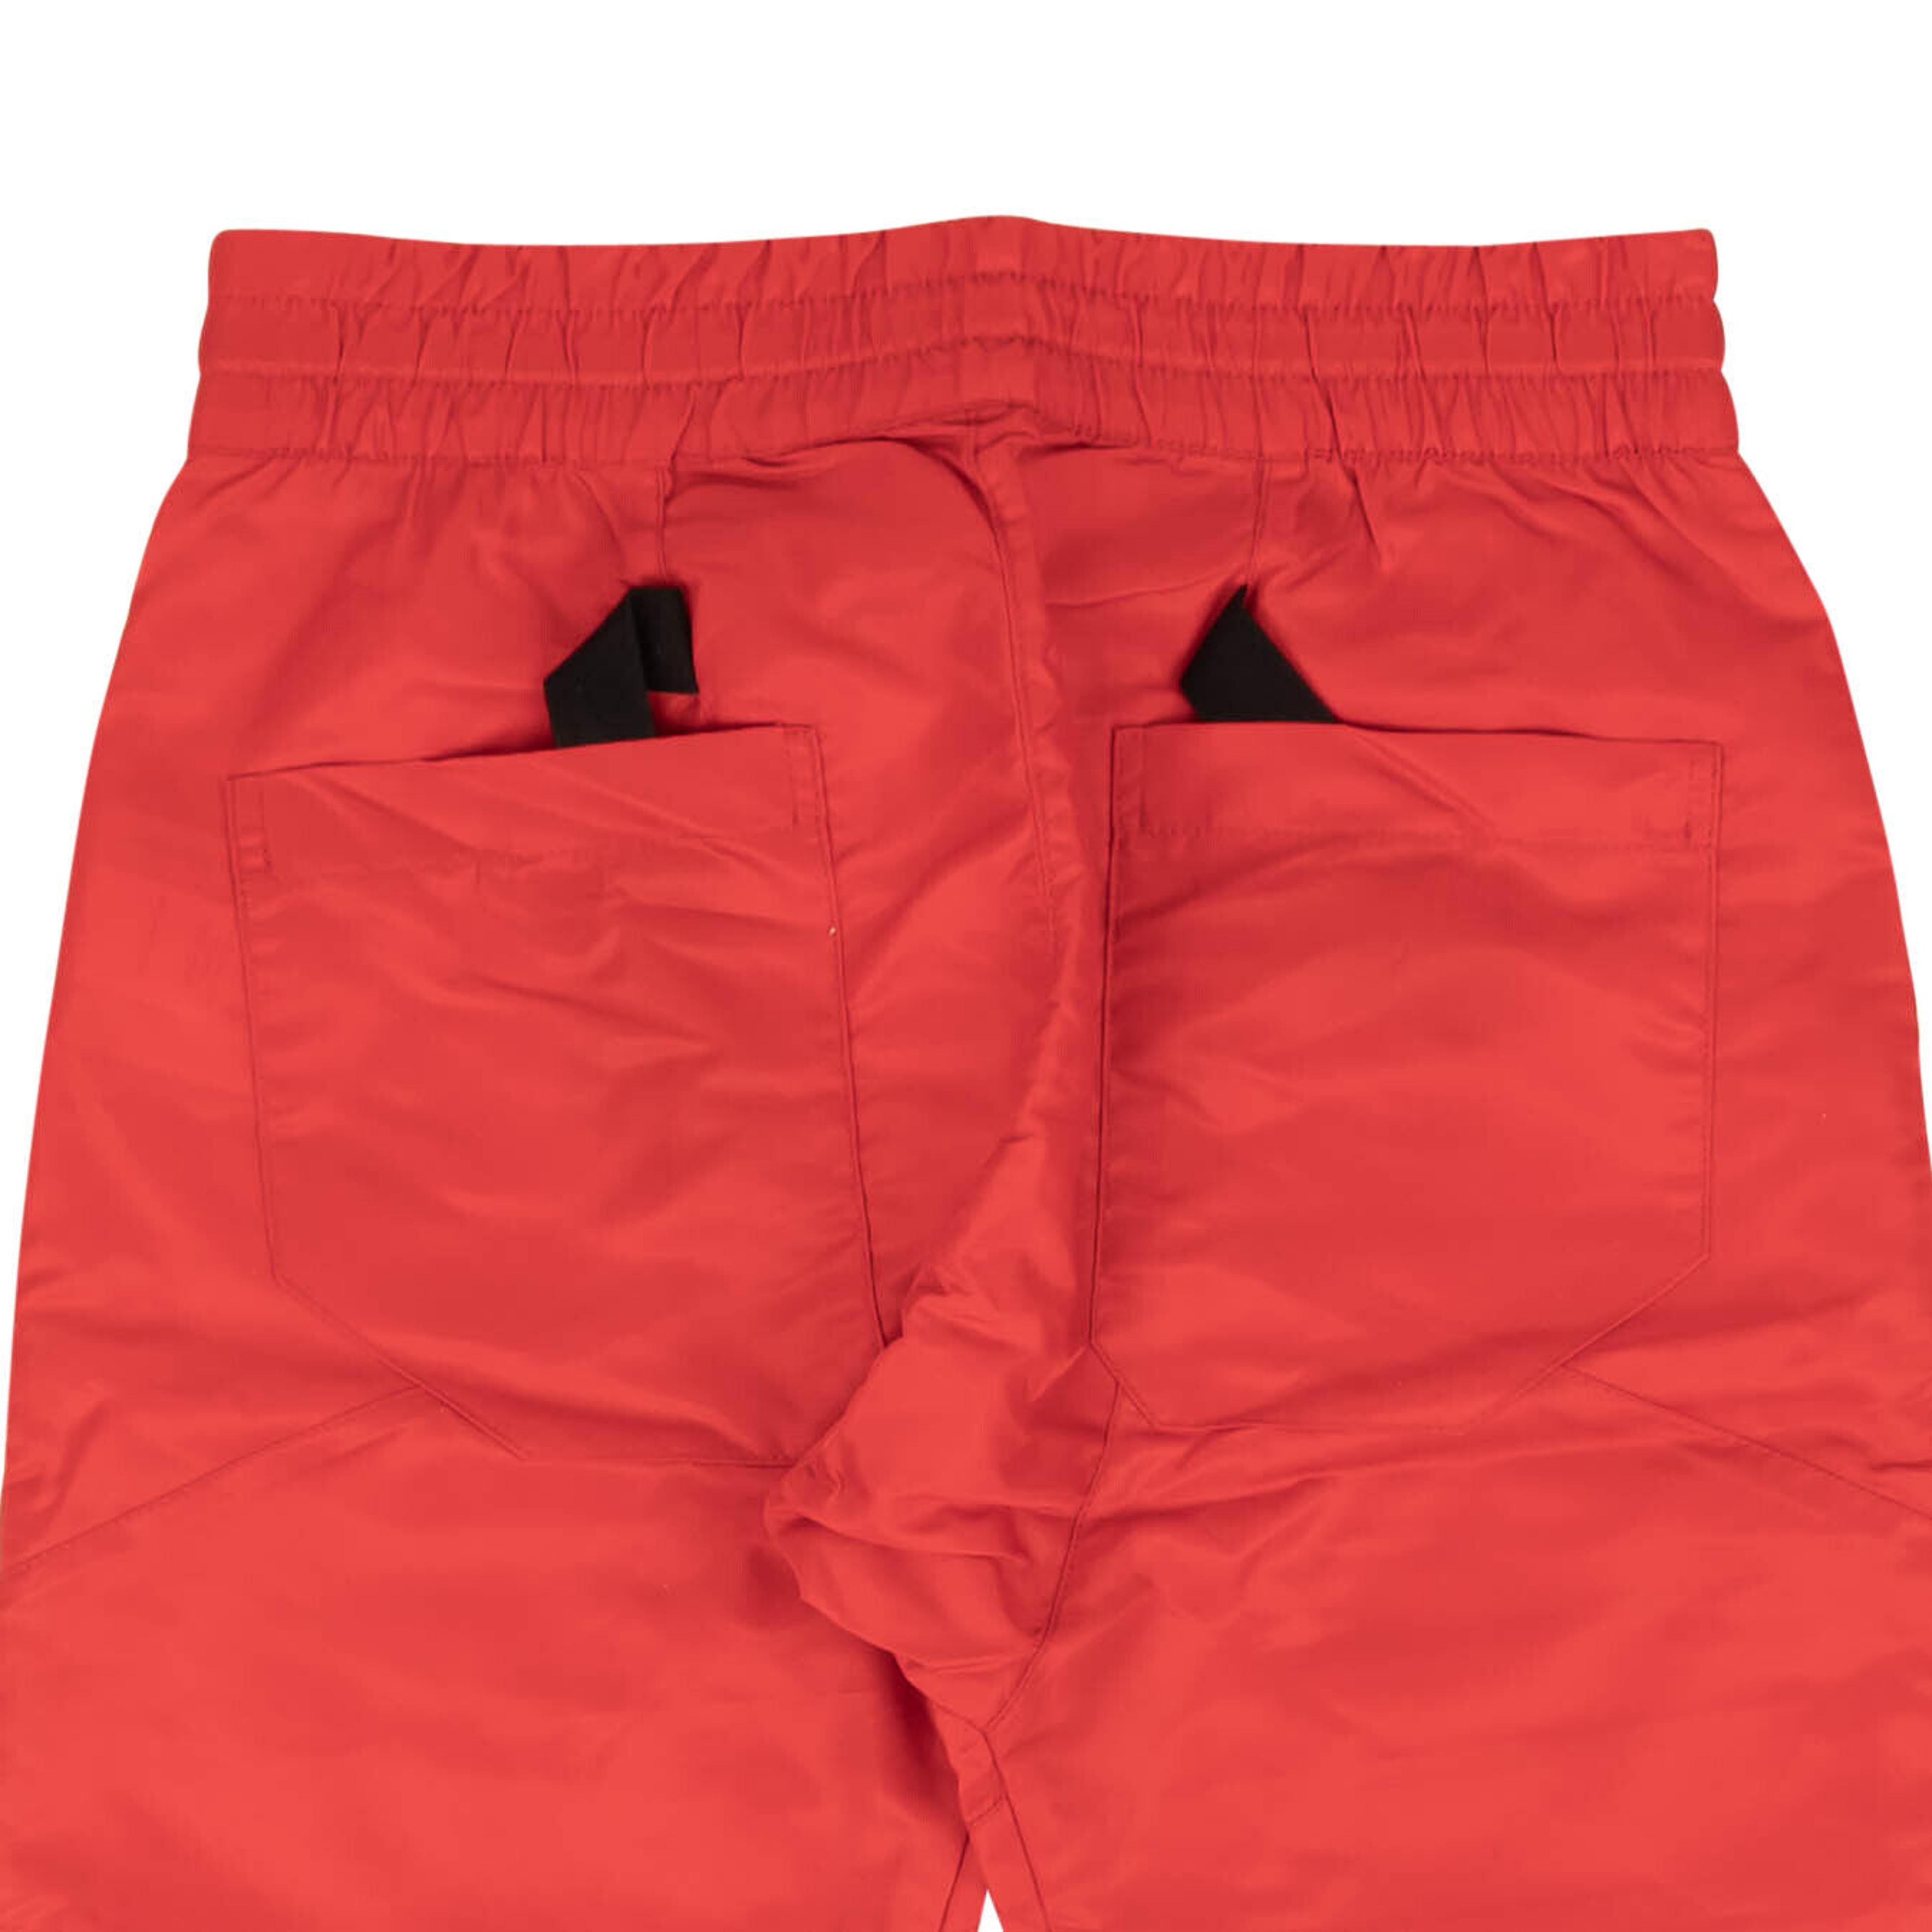 Alternate View 3 of Red Satin Zipper Pants